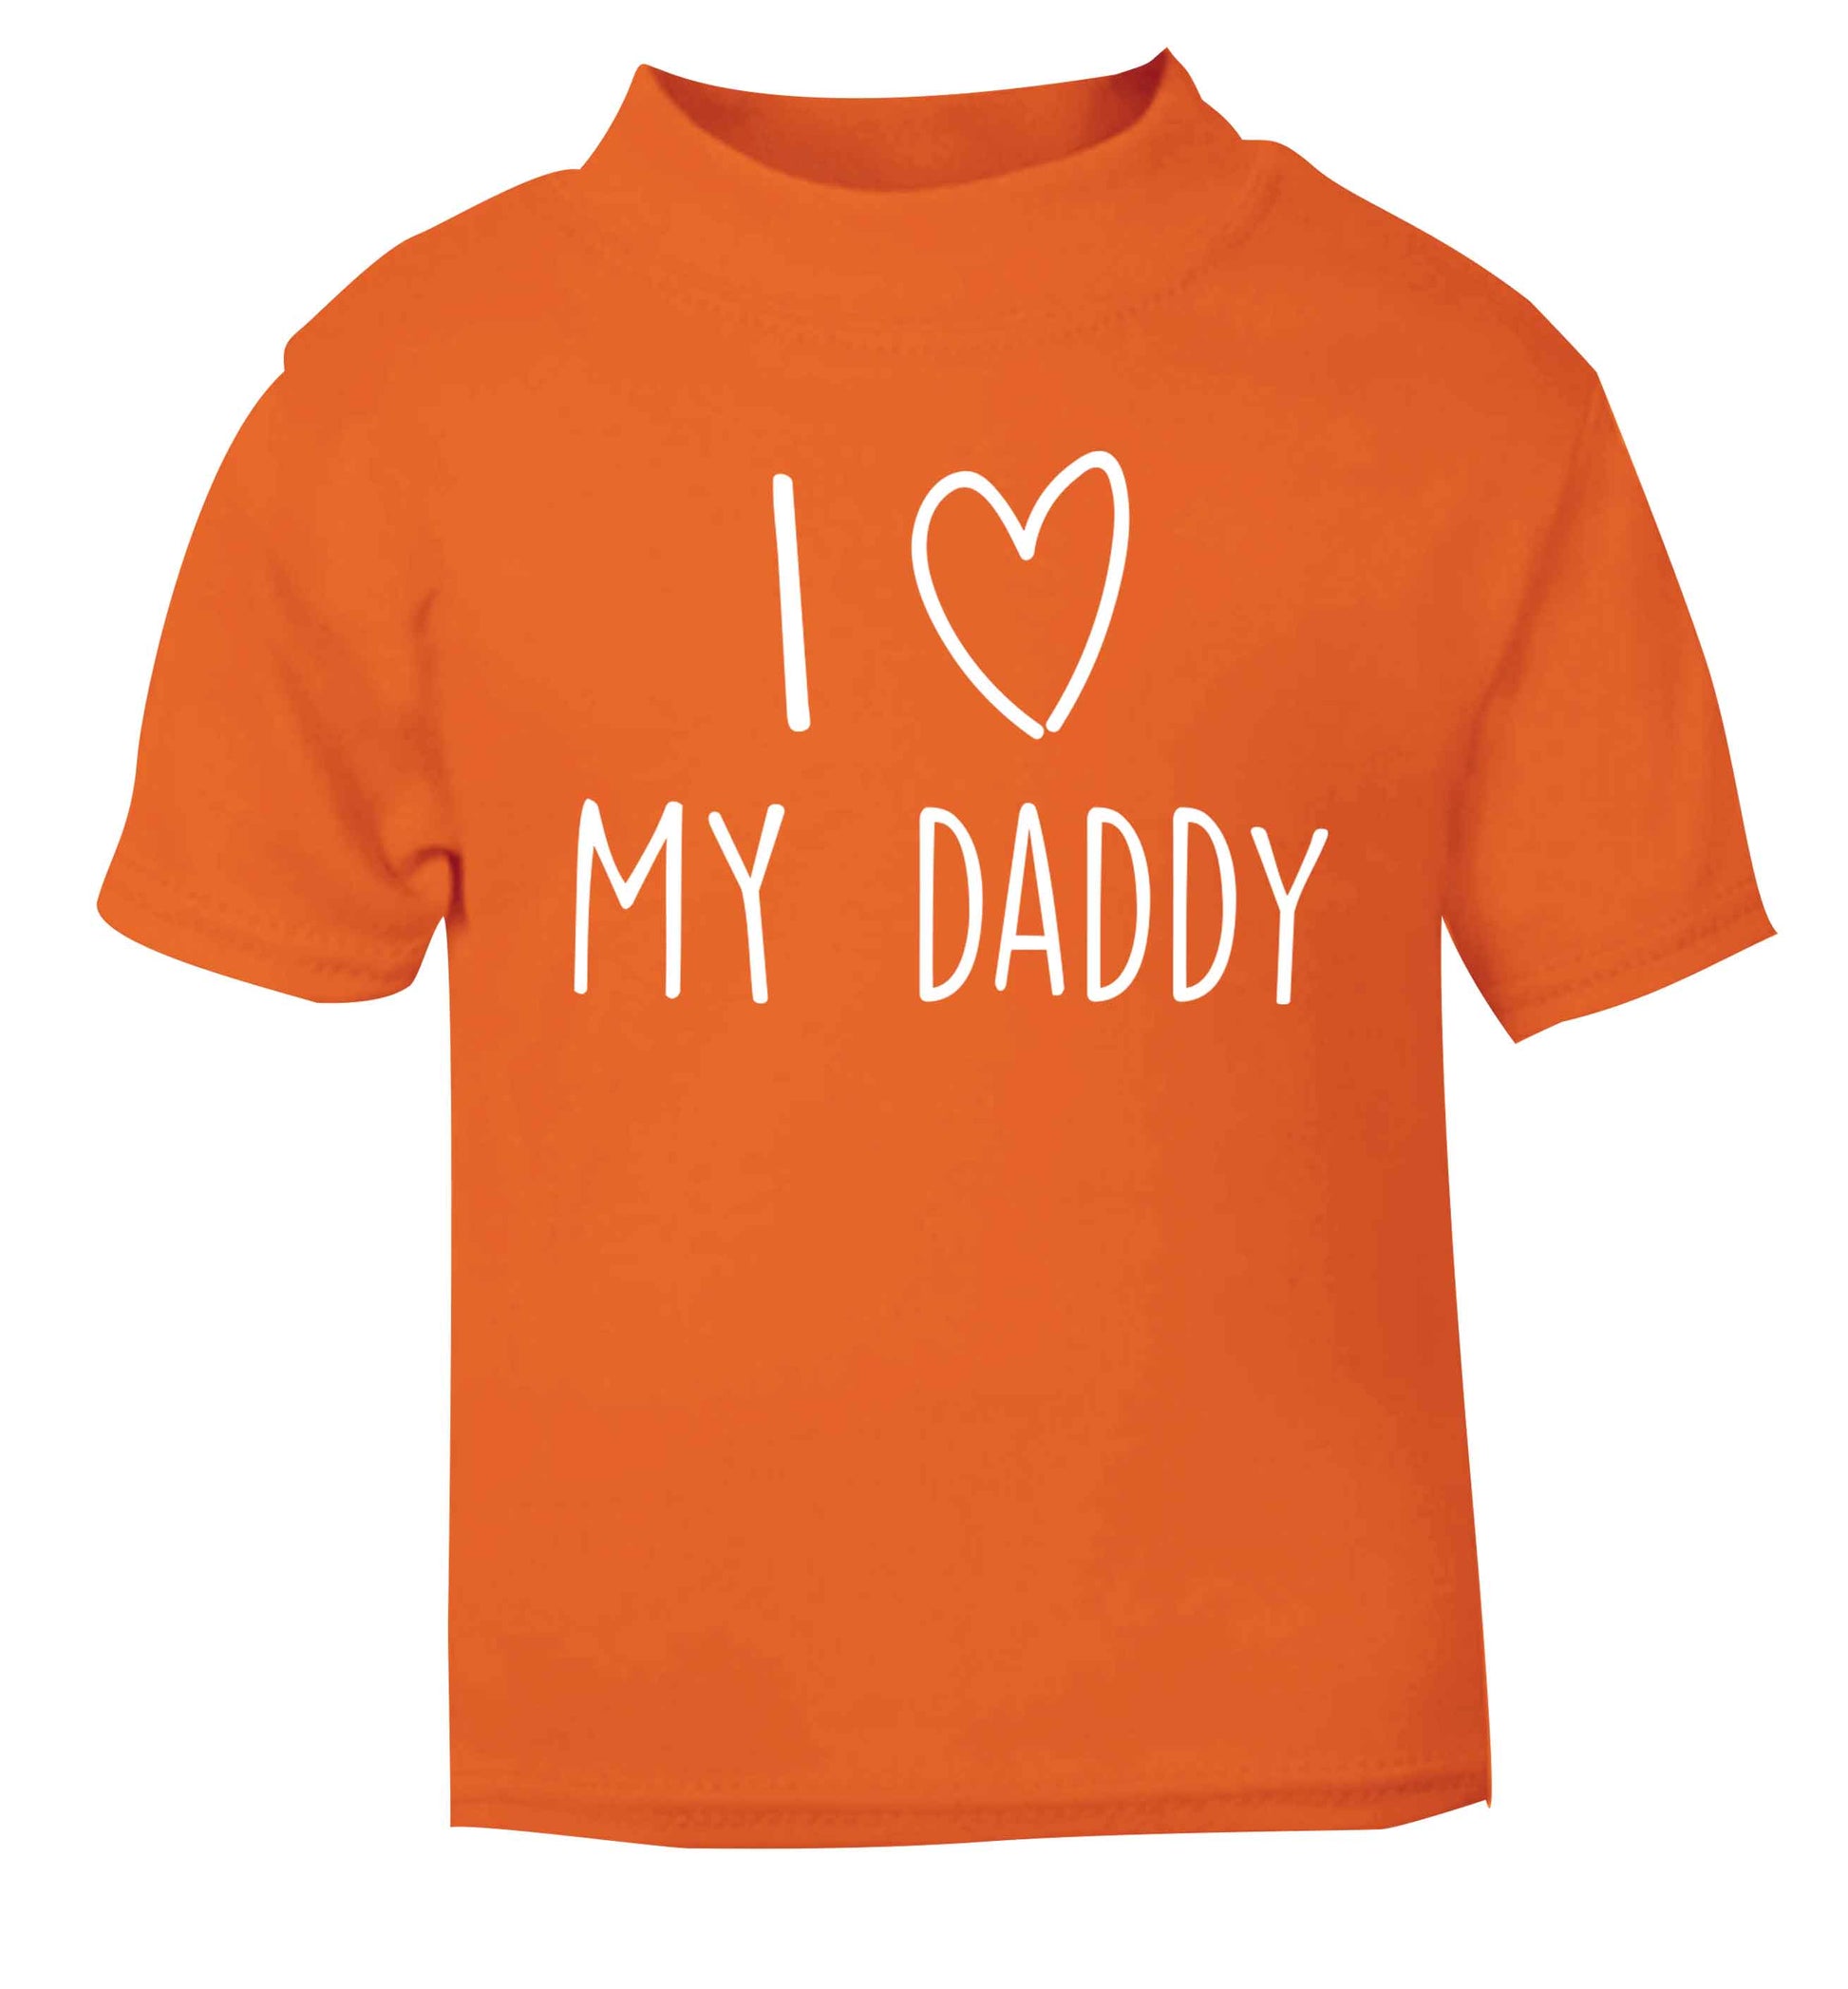 I love my daddy orange baby toddler Tshirt 2 Years